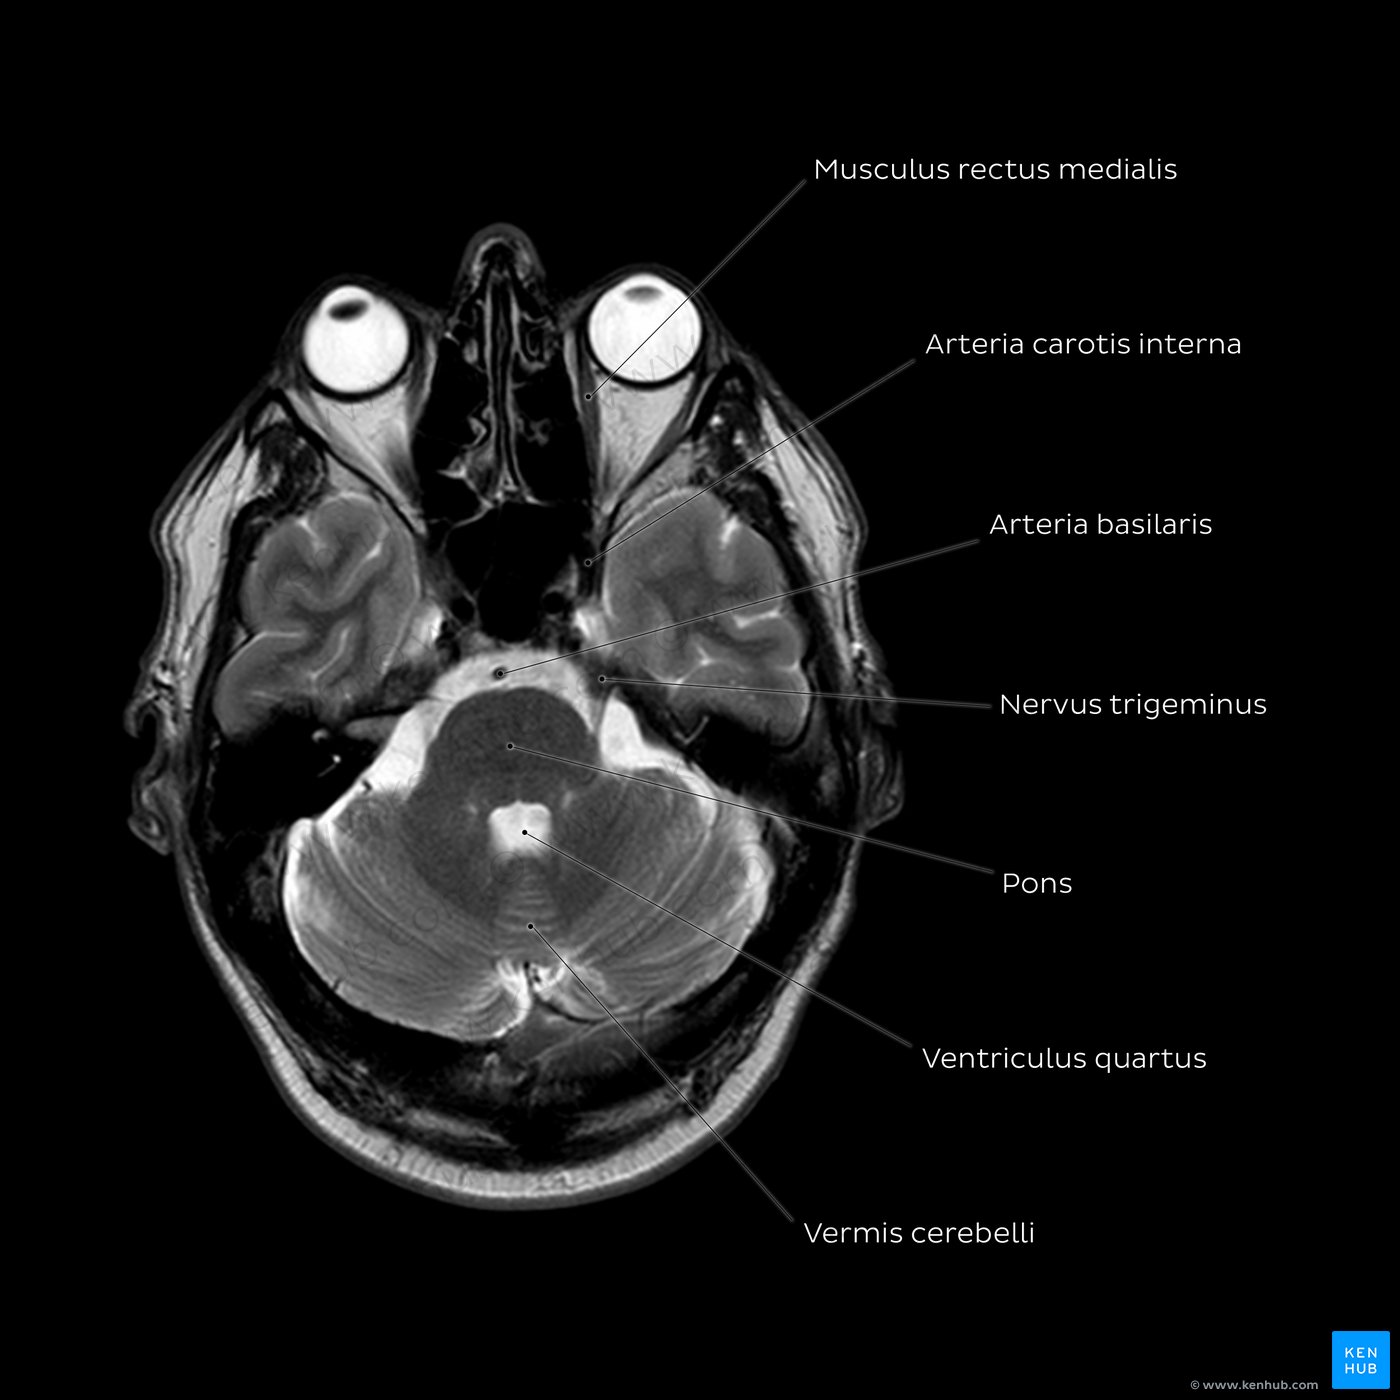 T2 MRI through the lower pons